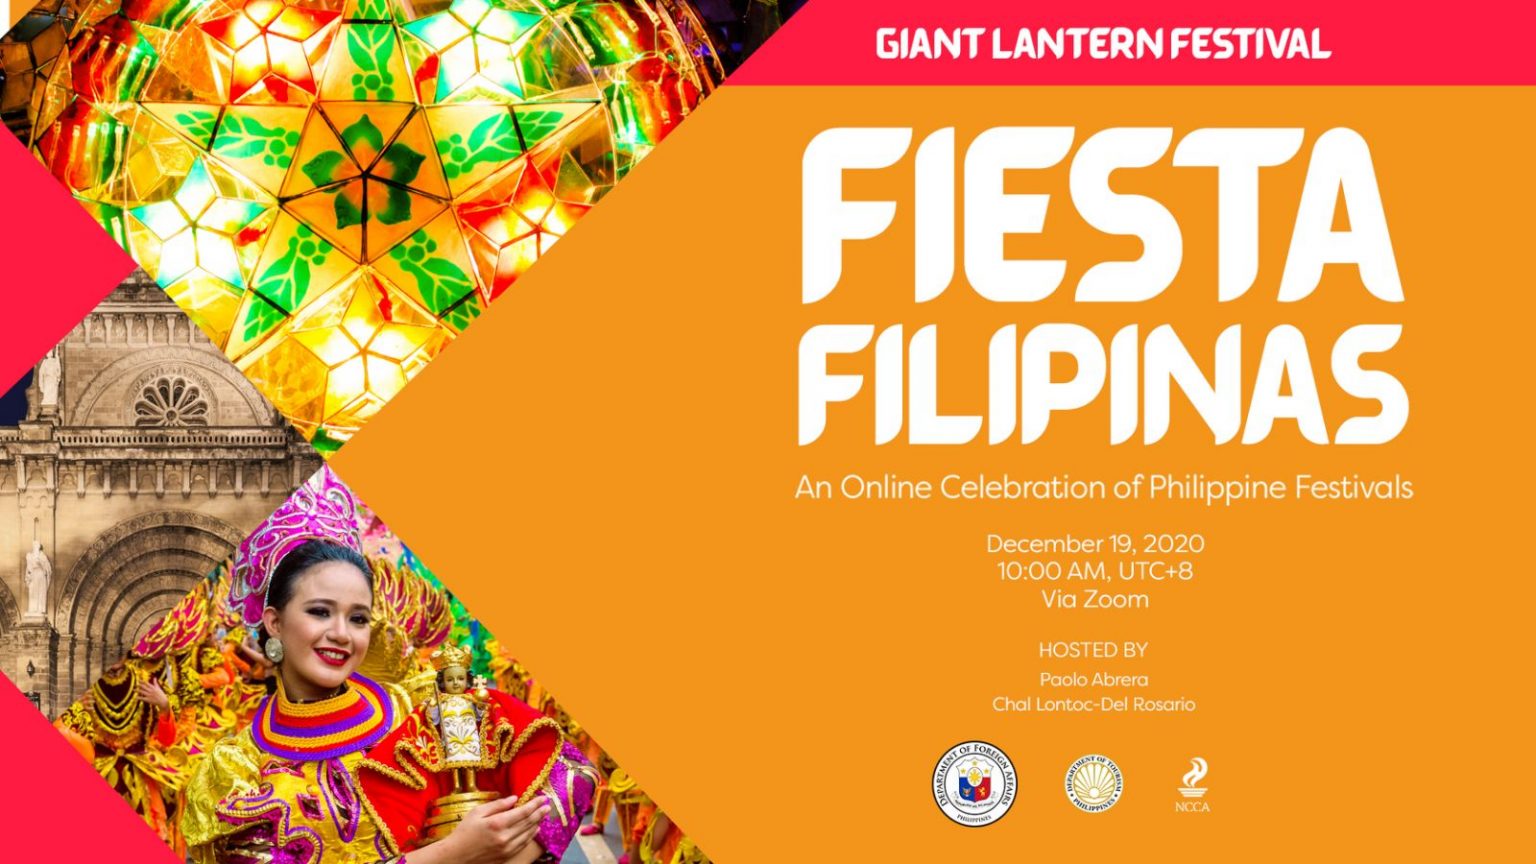 Fiesta Filipinas Giant Lantern Festival Philippine Consulate General